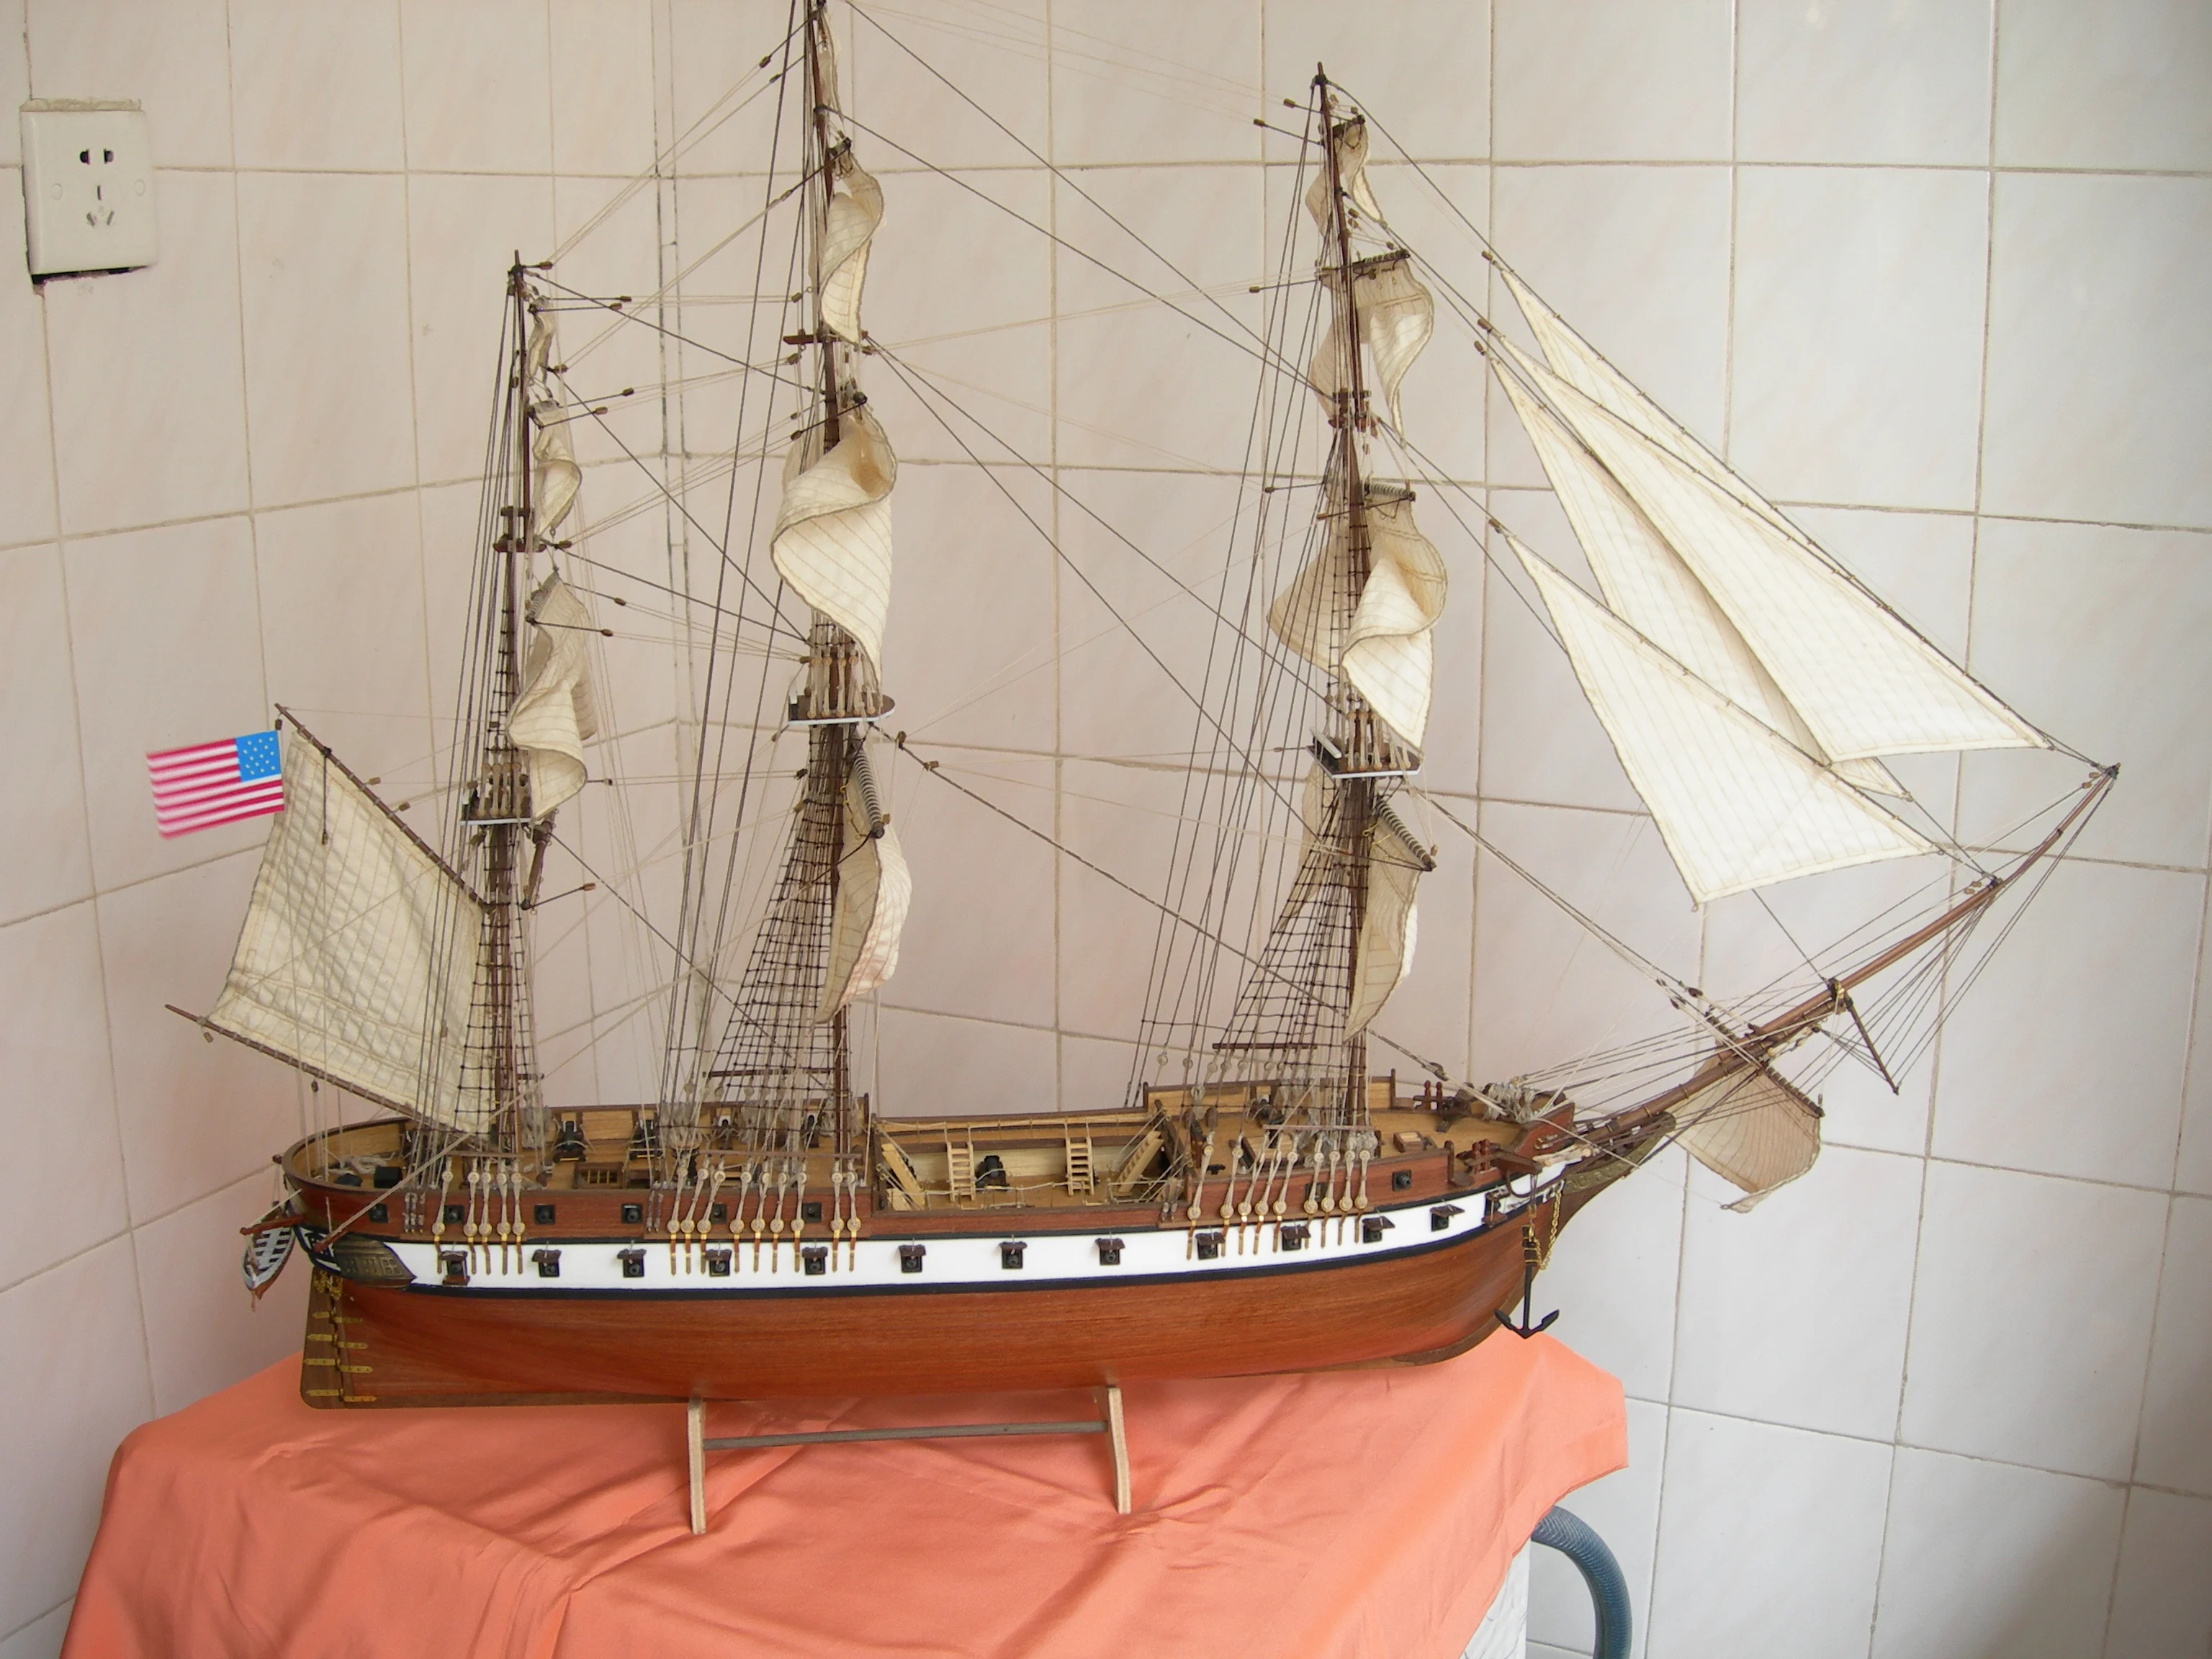 Sacle 1/85 Classic U.S. sailboat wooden model kits U.S. CONSTELLATION 1843 ship model